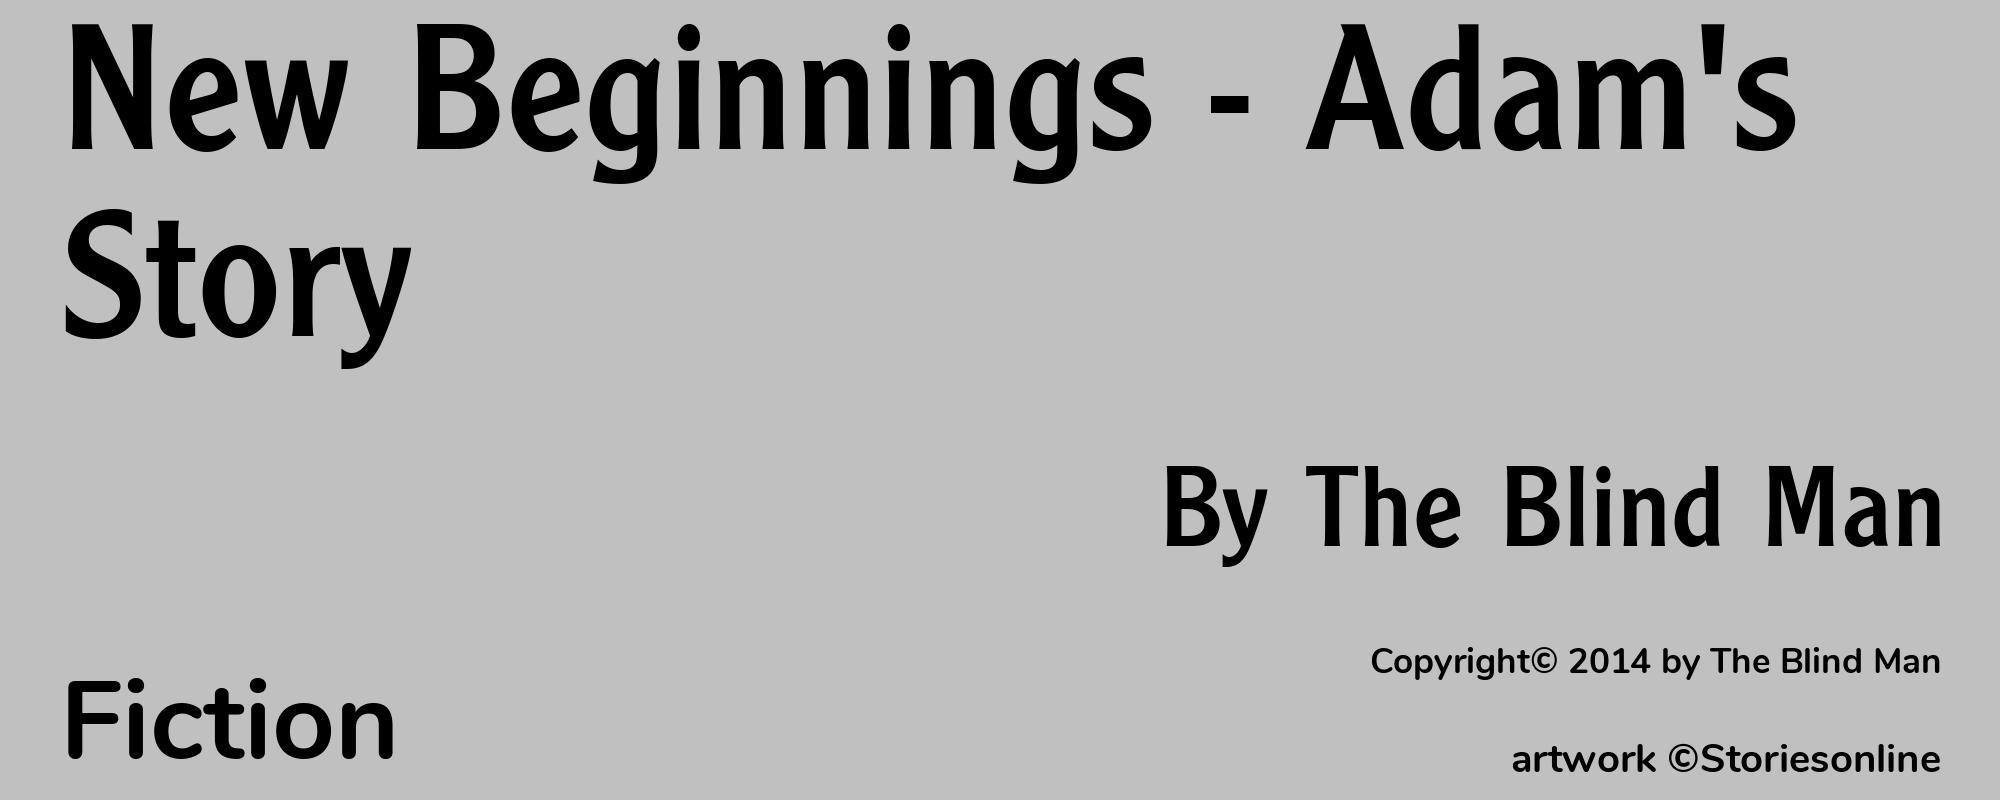 New Beginnings - Adam's Story - Cover